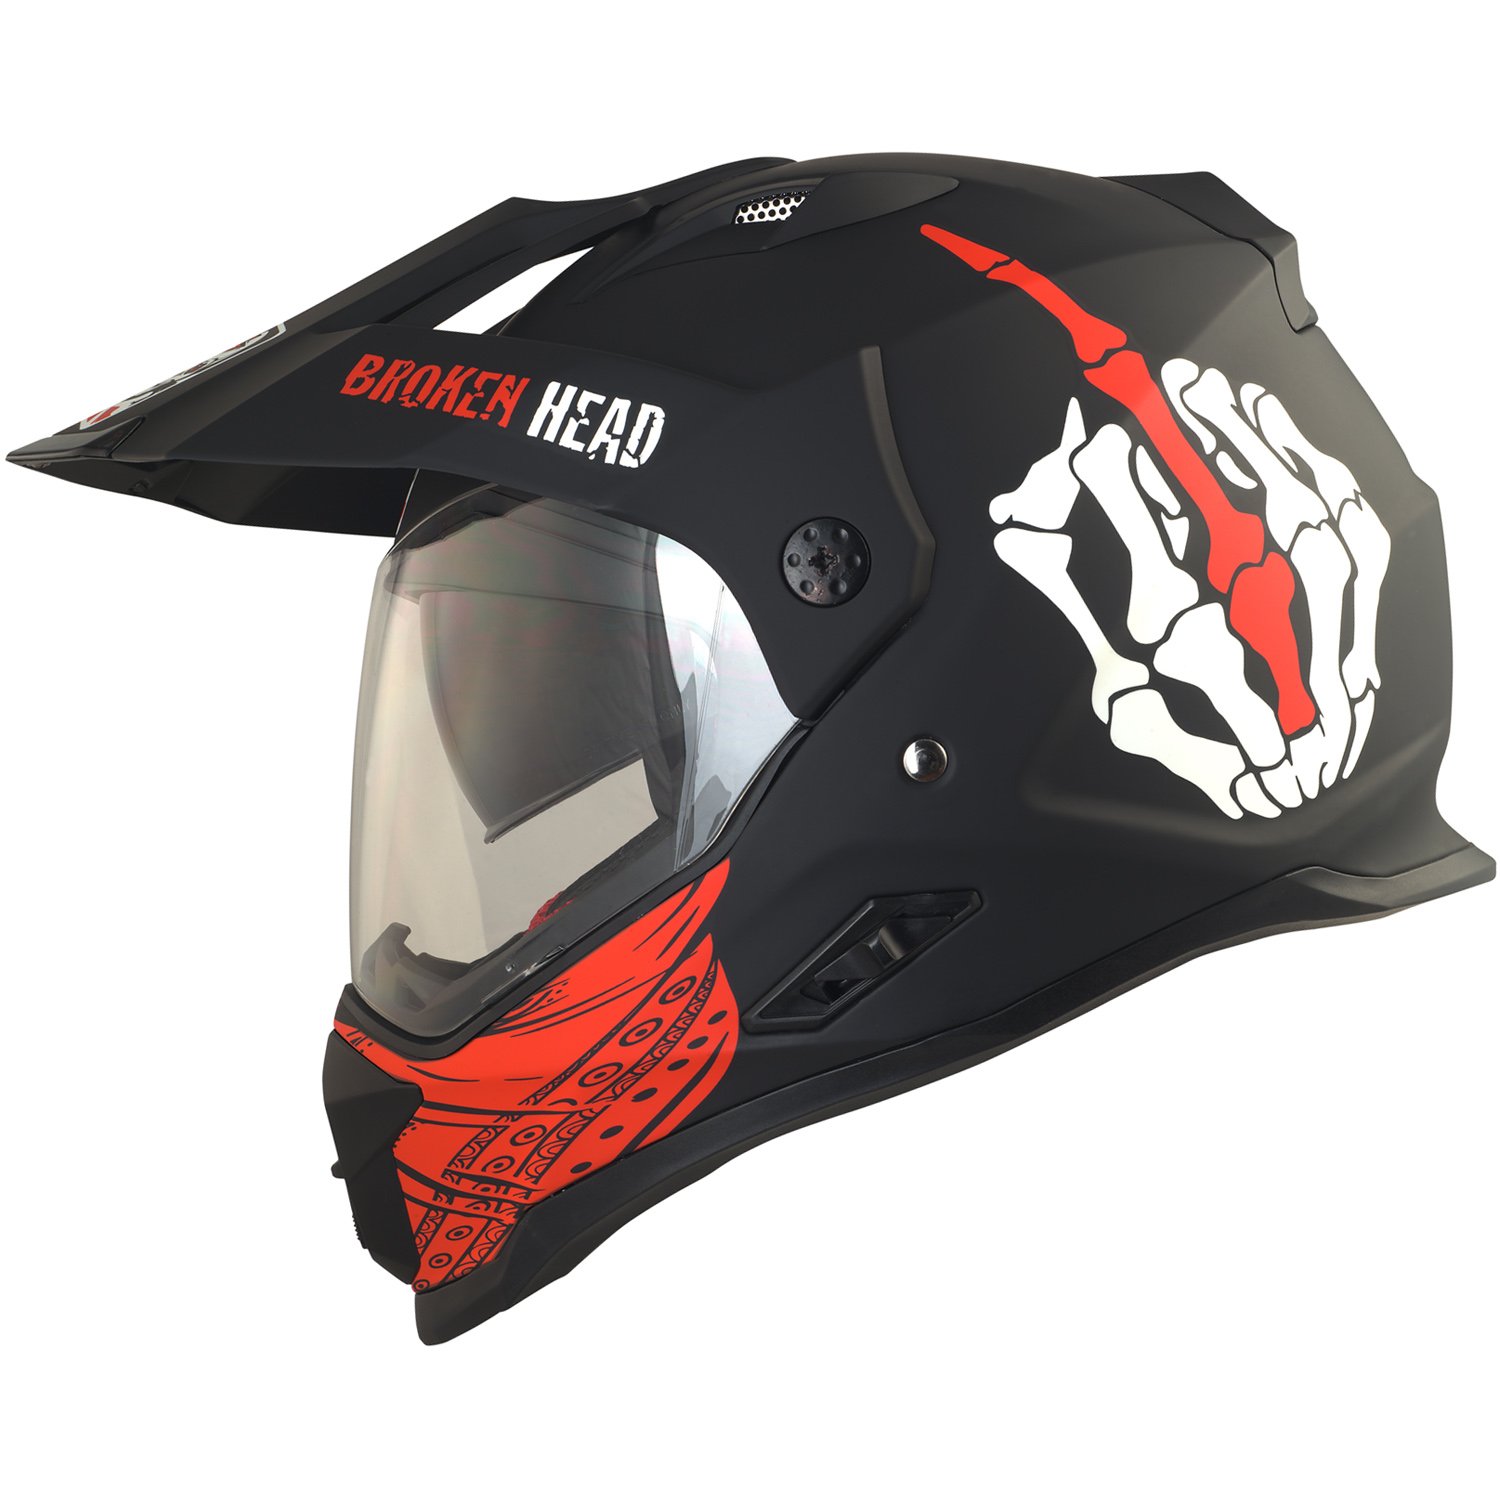 Broken Head Street Rebel Motocross-Helm rot mit Visier - Enduro-Helm - MX Cross-Helm mit Sonnenblende - Quad-Helm (M 57-58 cm)